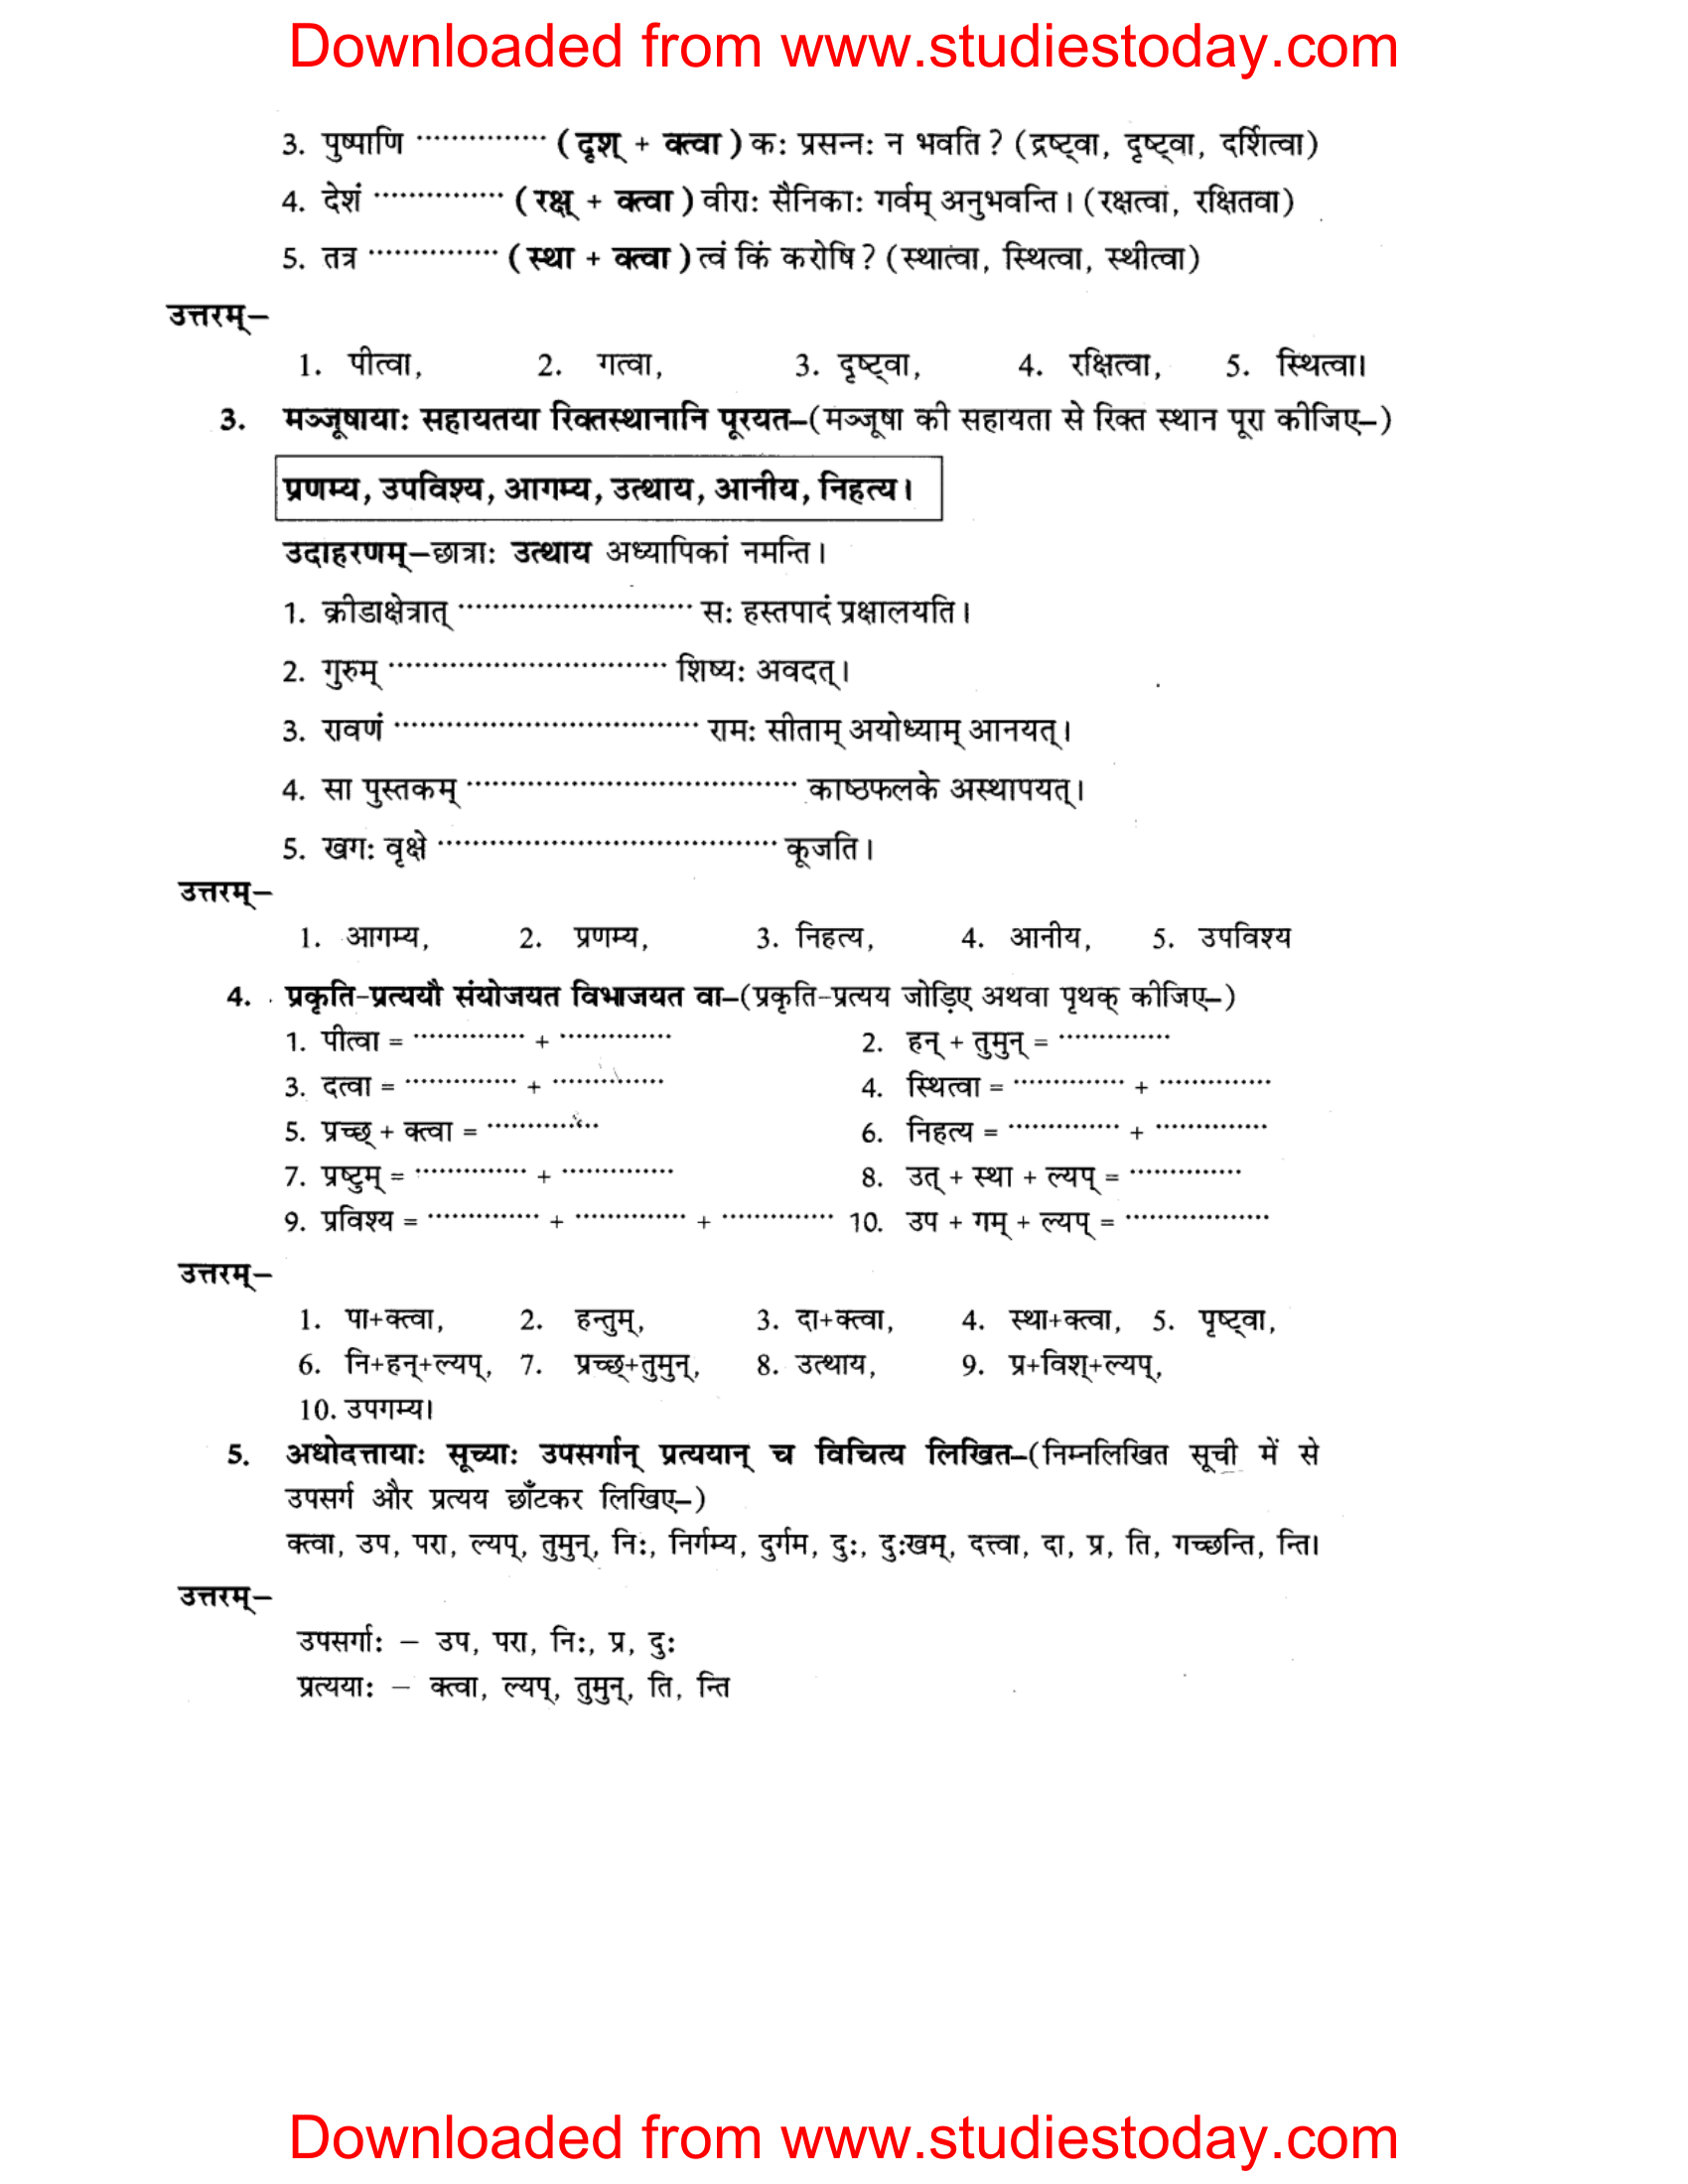 ncert-solutions-class-8-sanskrit-chapter-9-upsarga-pratya-ch-abhyas-2